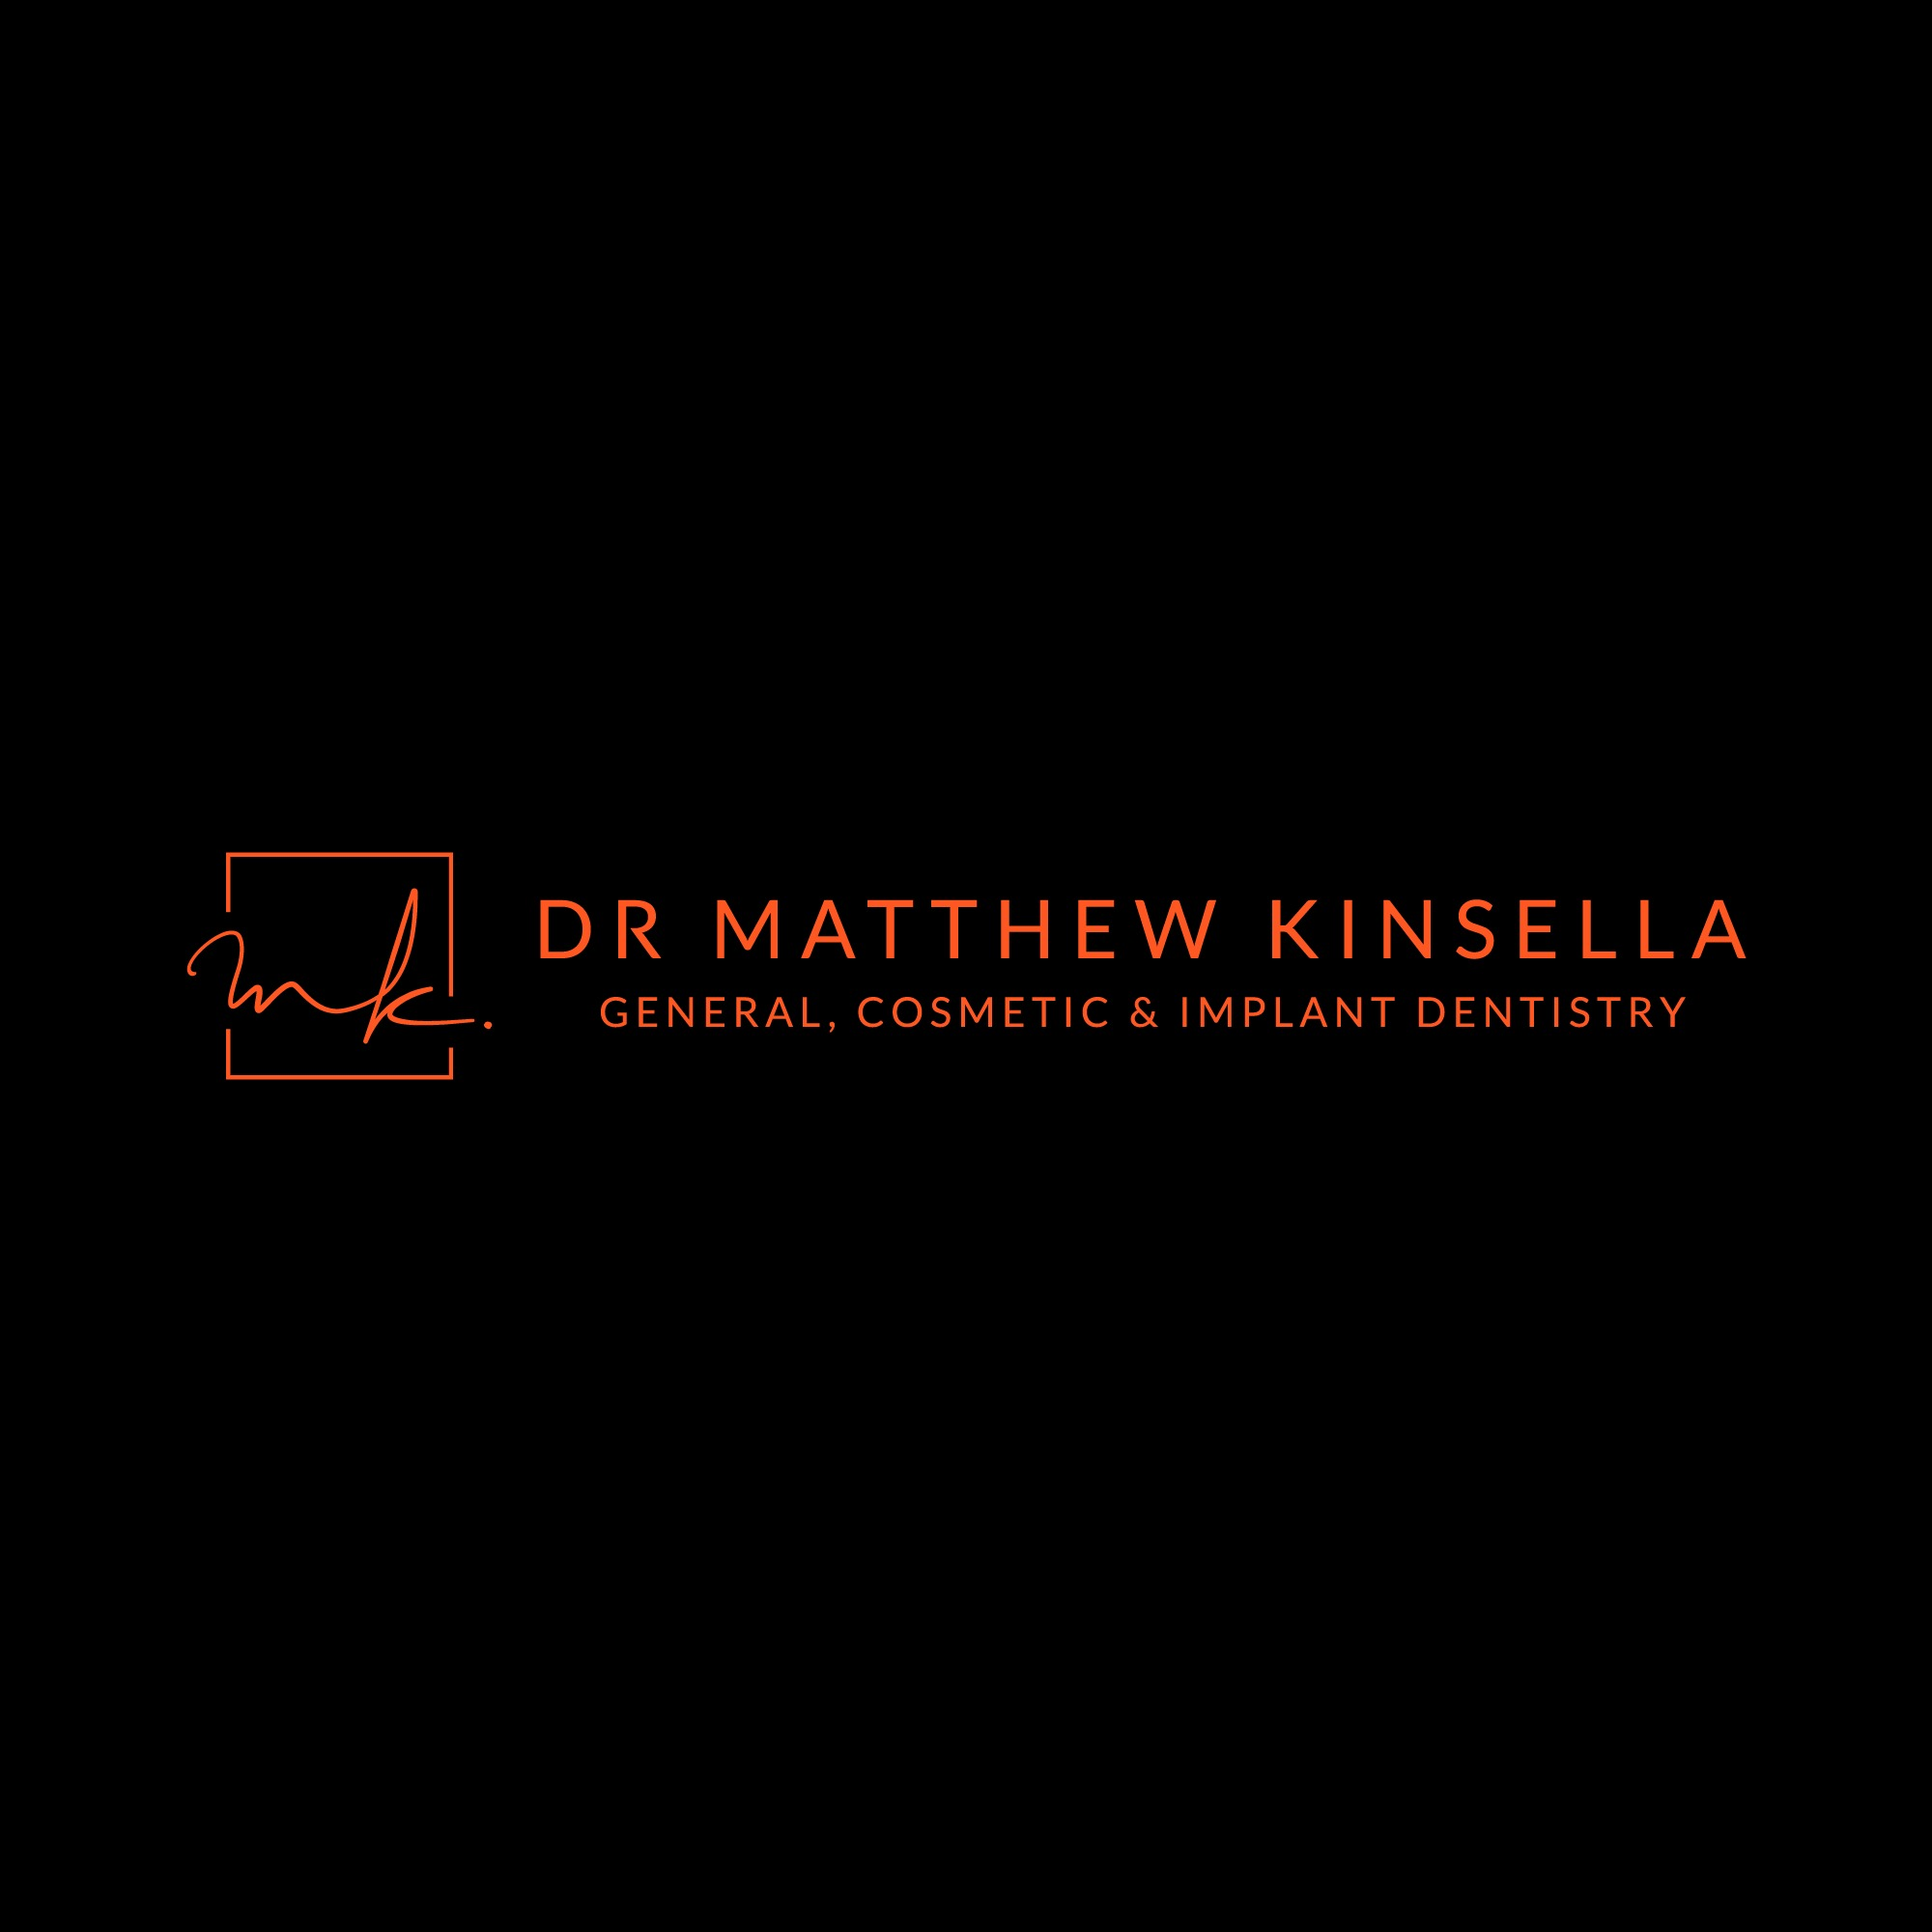 Dr Matthew Kinsella, General, Cosmetic & Implant Dentistry Logo